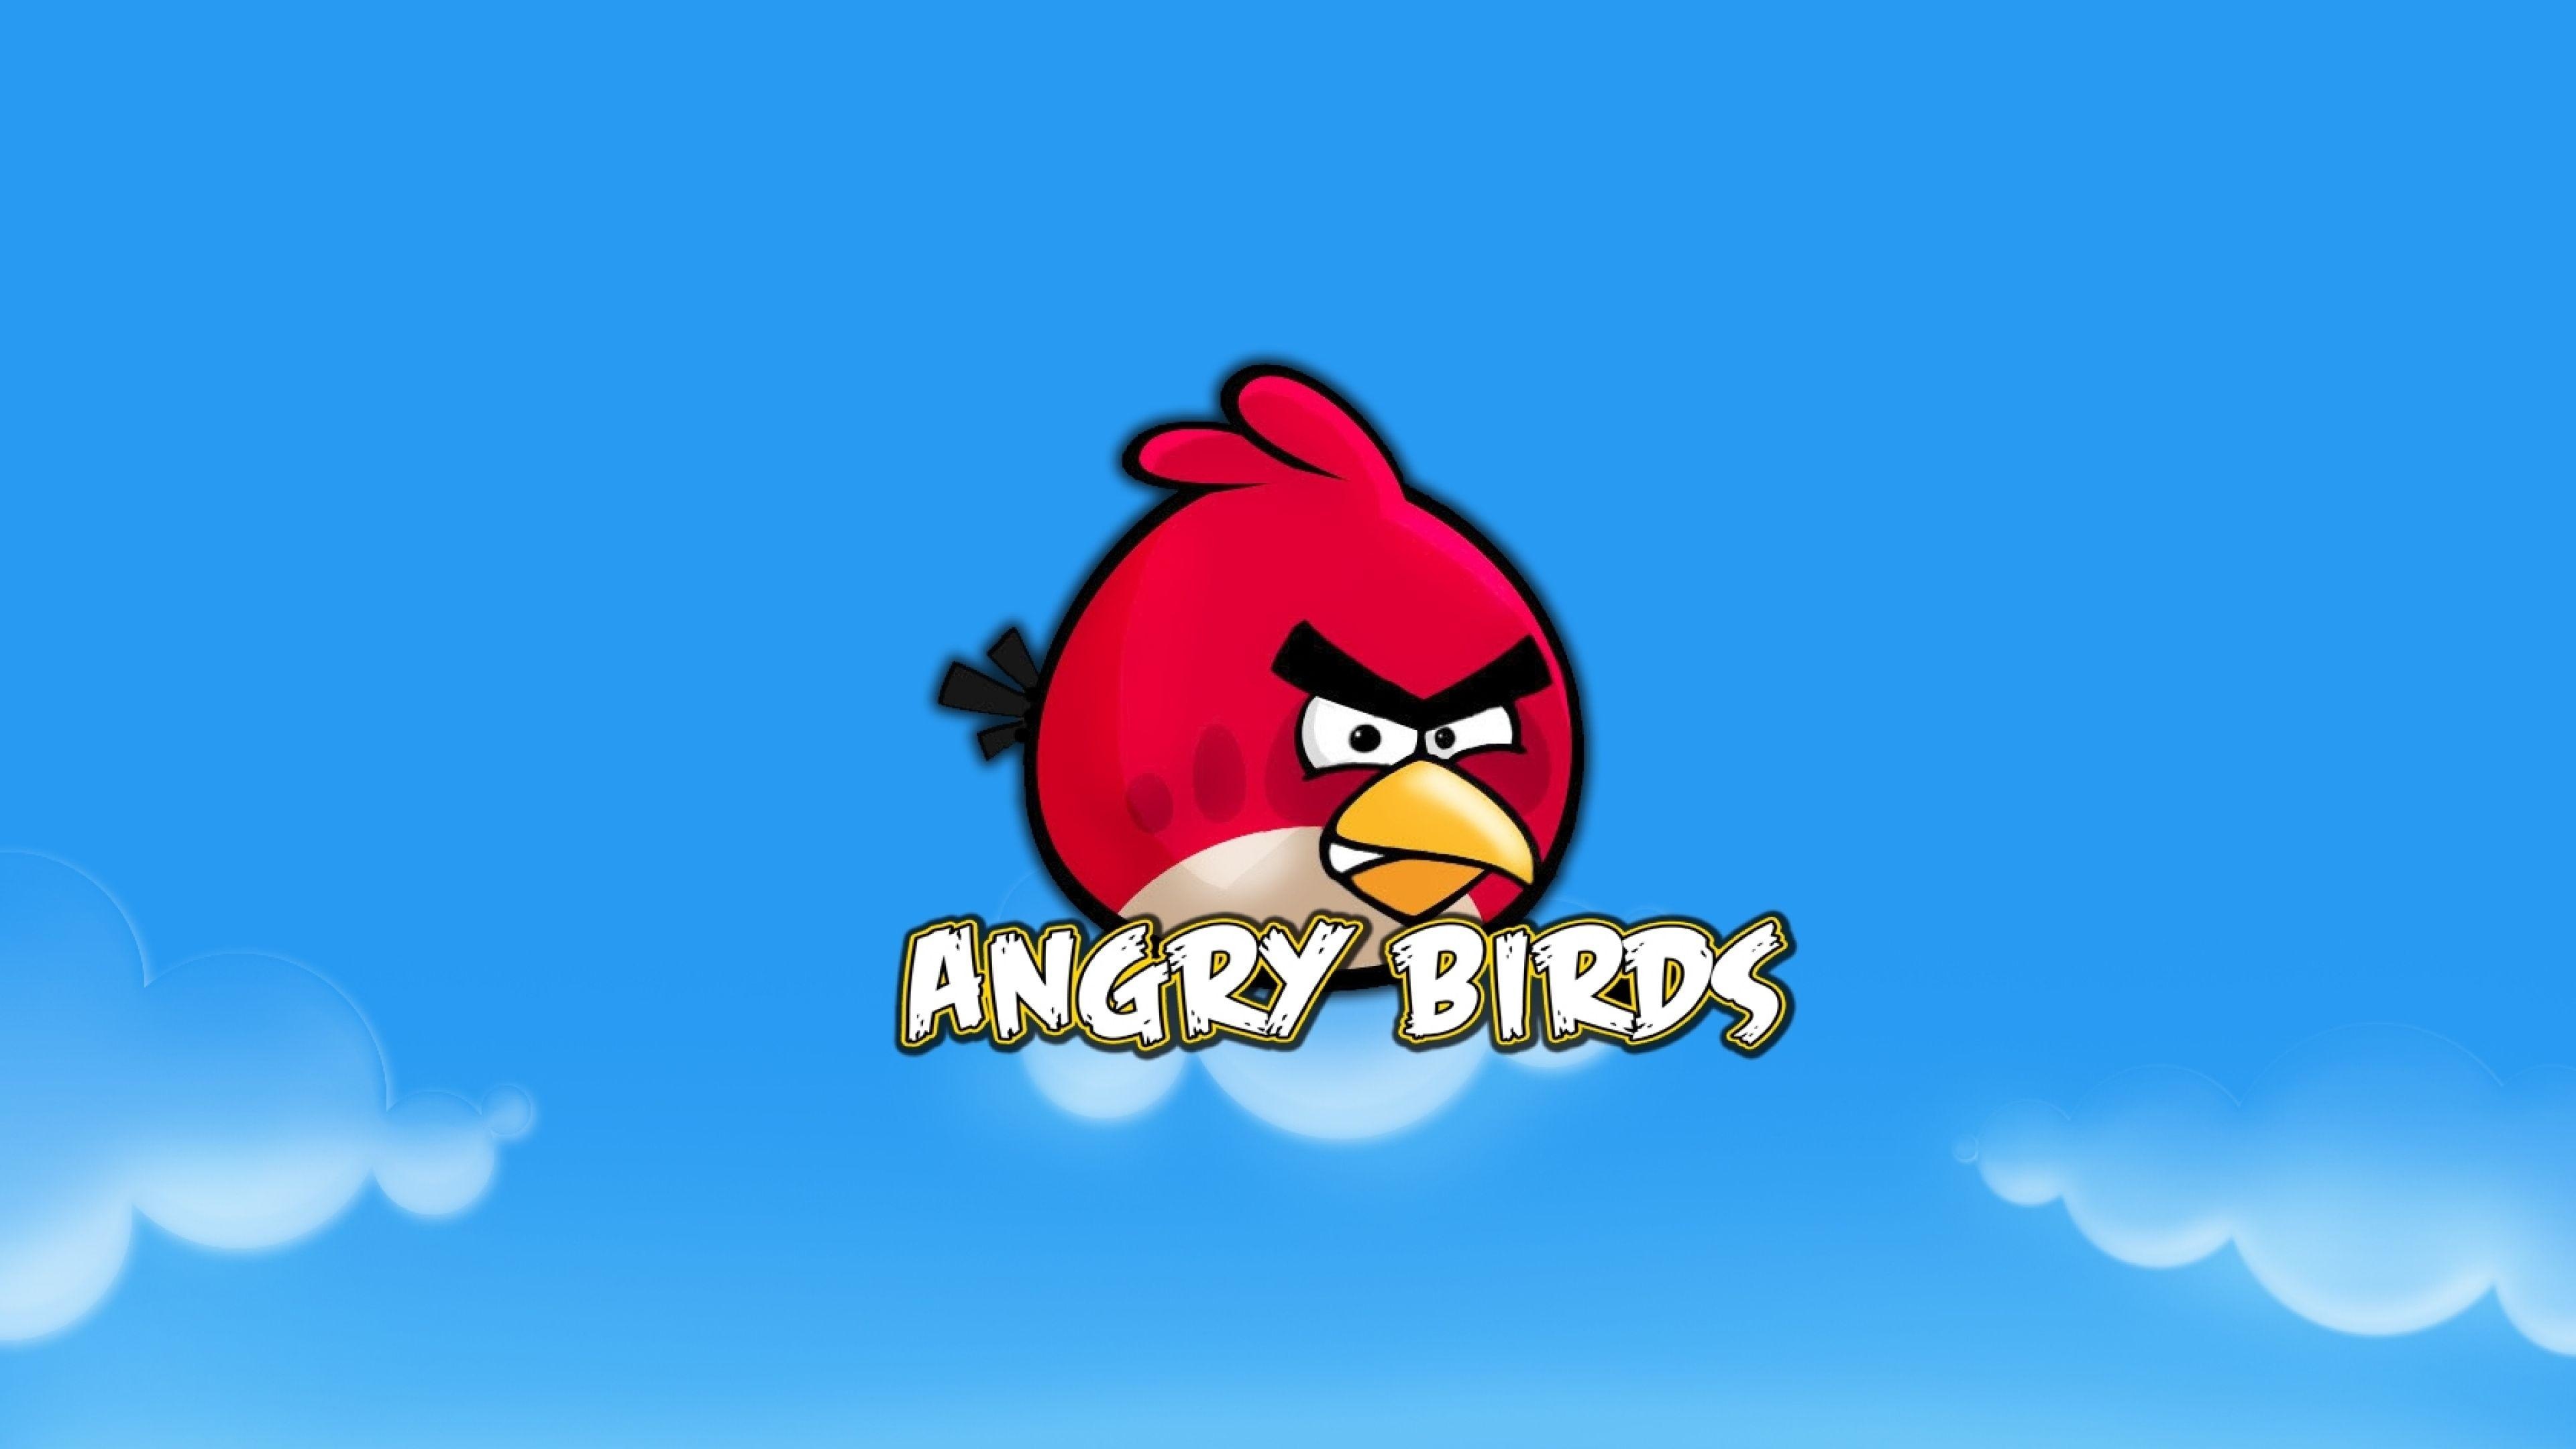 Angry birds 1.5 2. Игра Энгри бердз 2 злые птицы. Ангри берс 1. Angry Birds игра логотип. Красная птица игры Angry Birds.